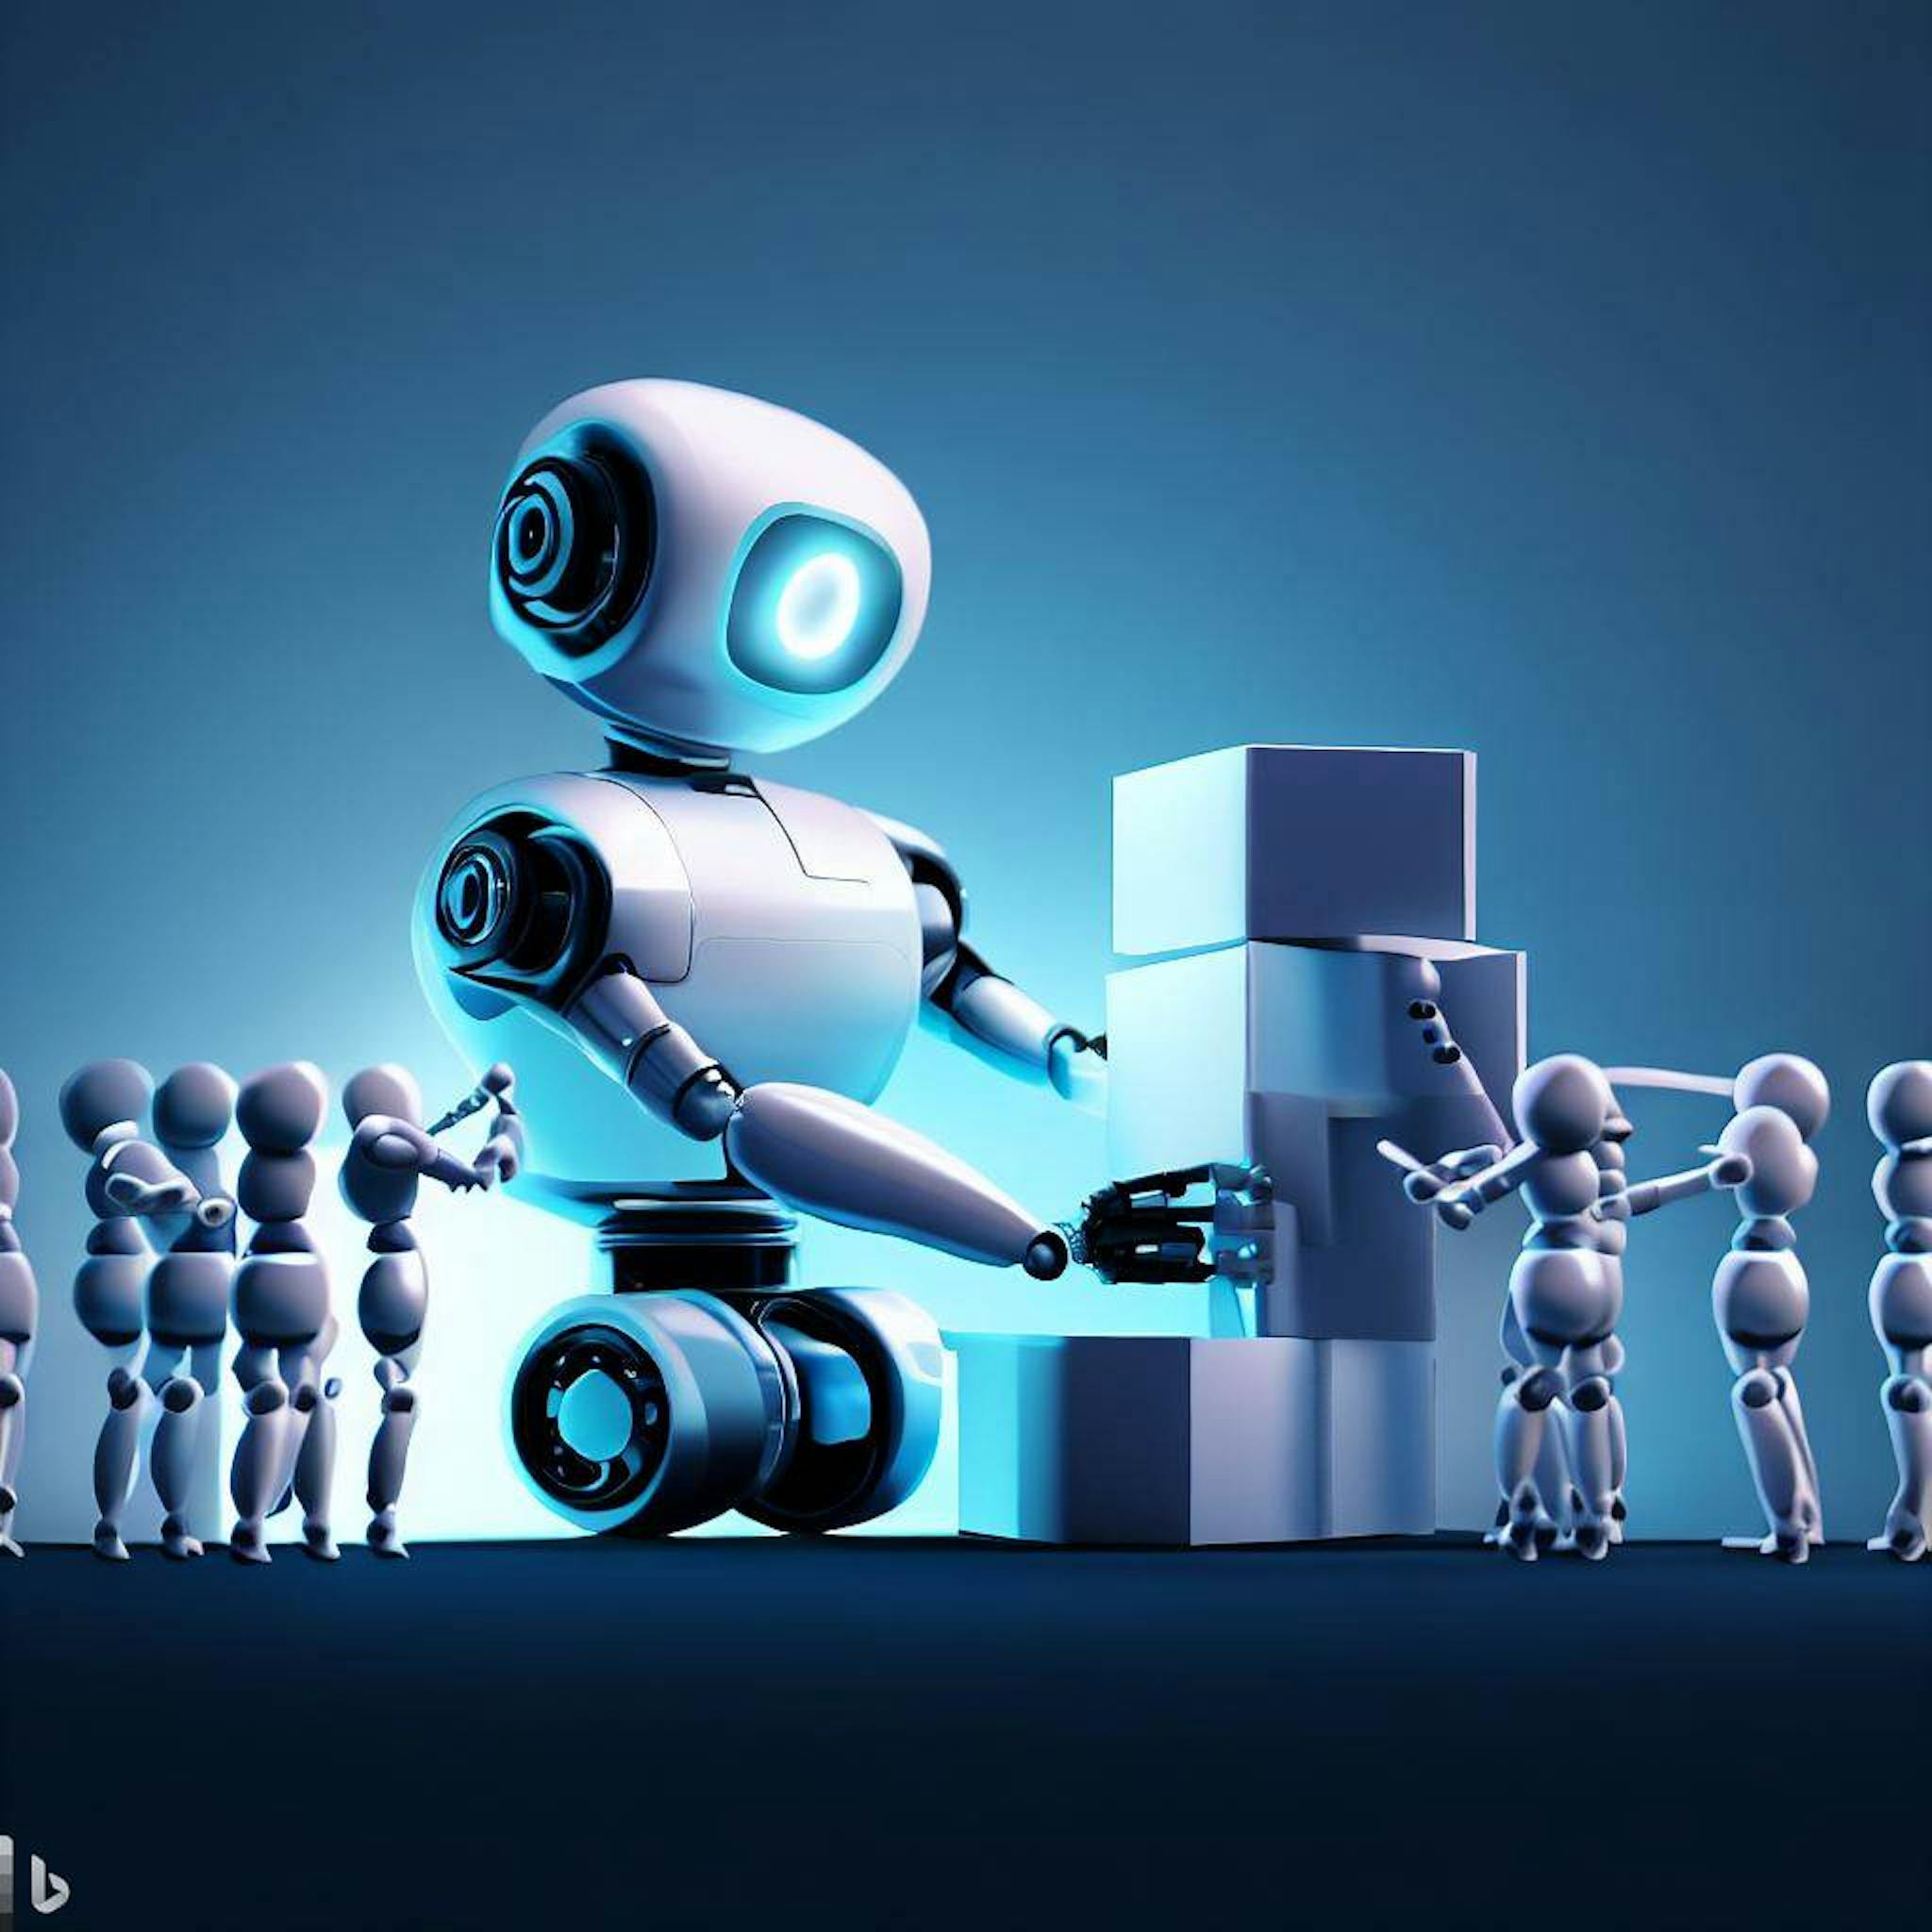  Robot Building Relationships